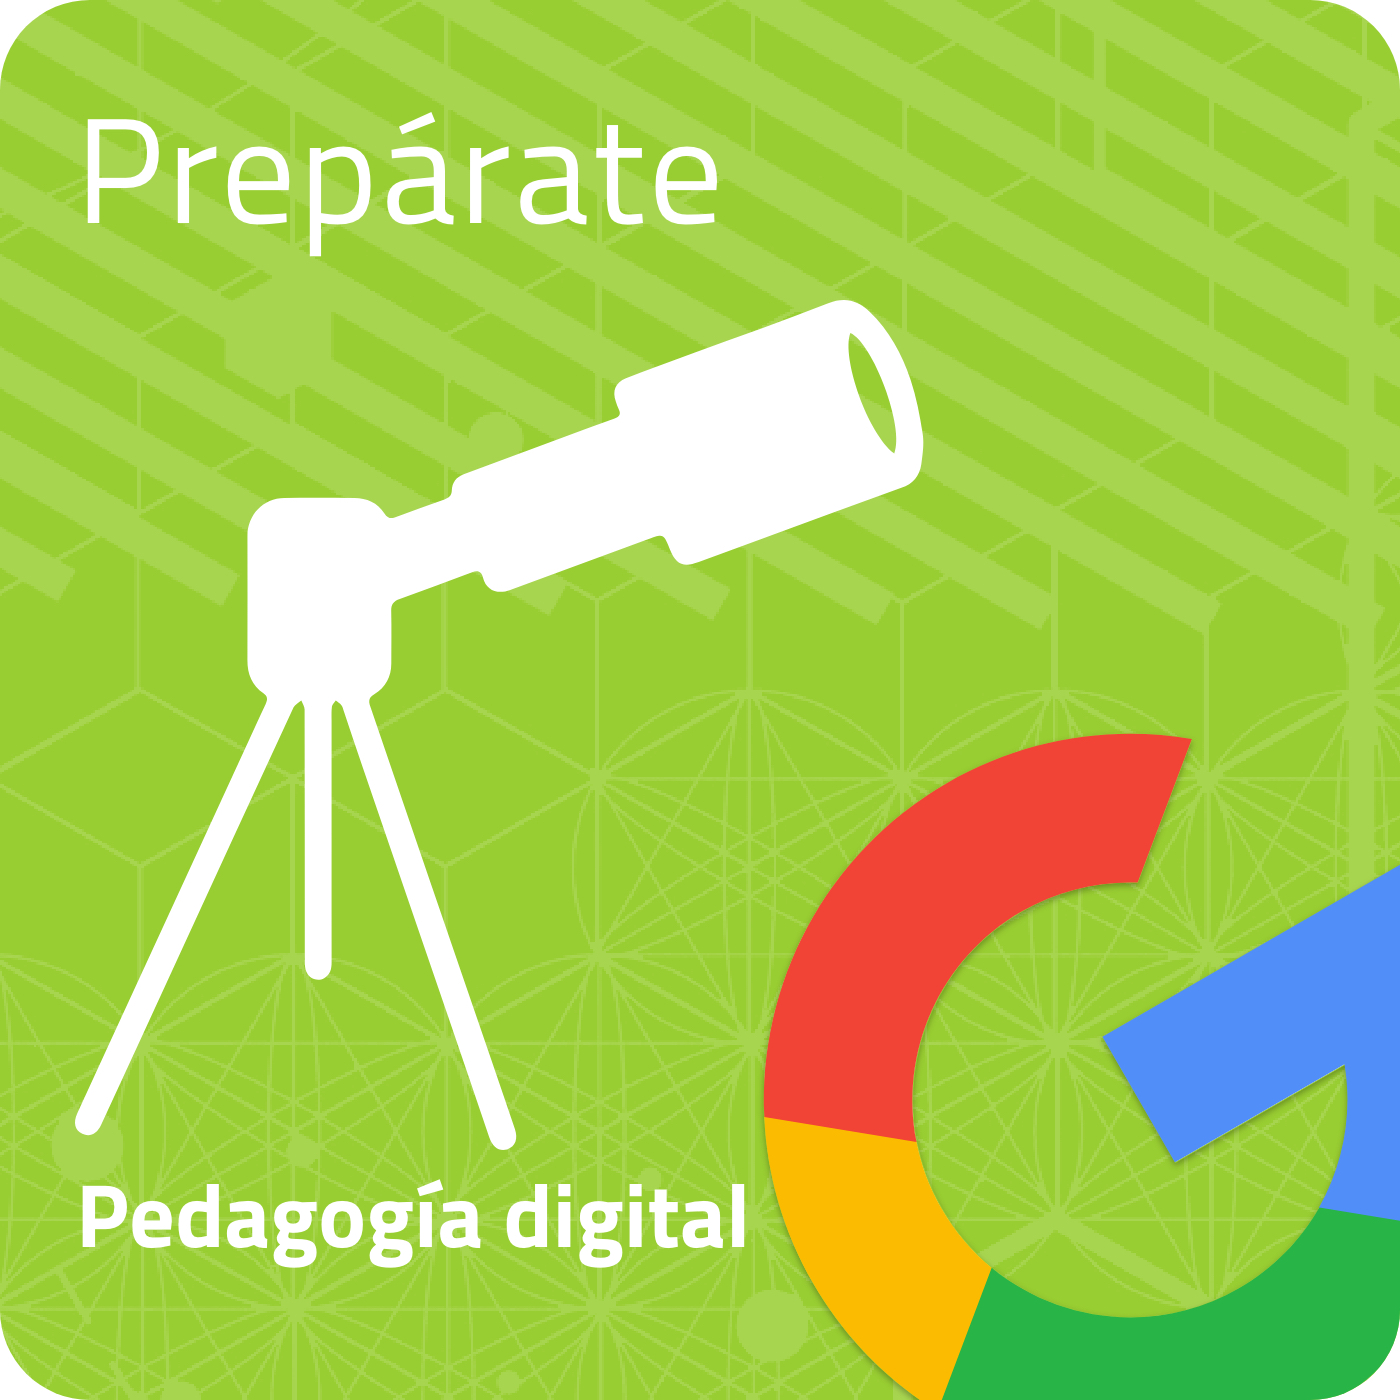 PEDAGOGÍA DIGITAL - Prepárate con Google (I Edición)